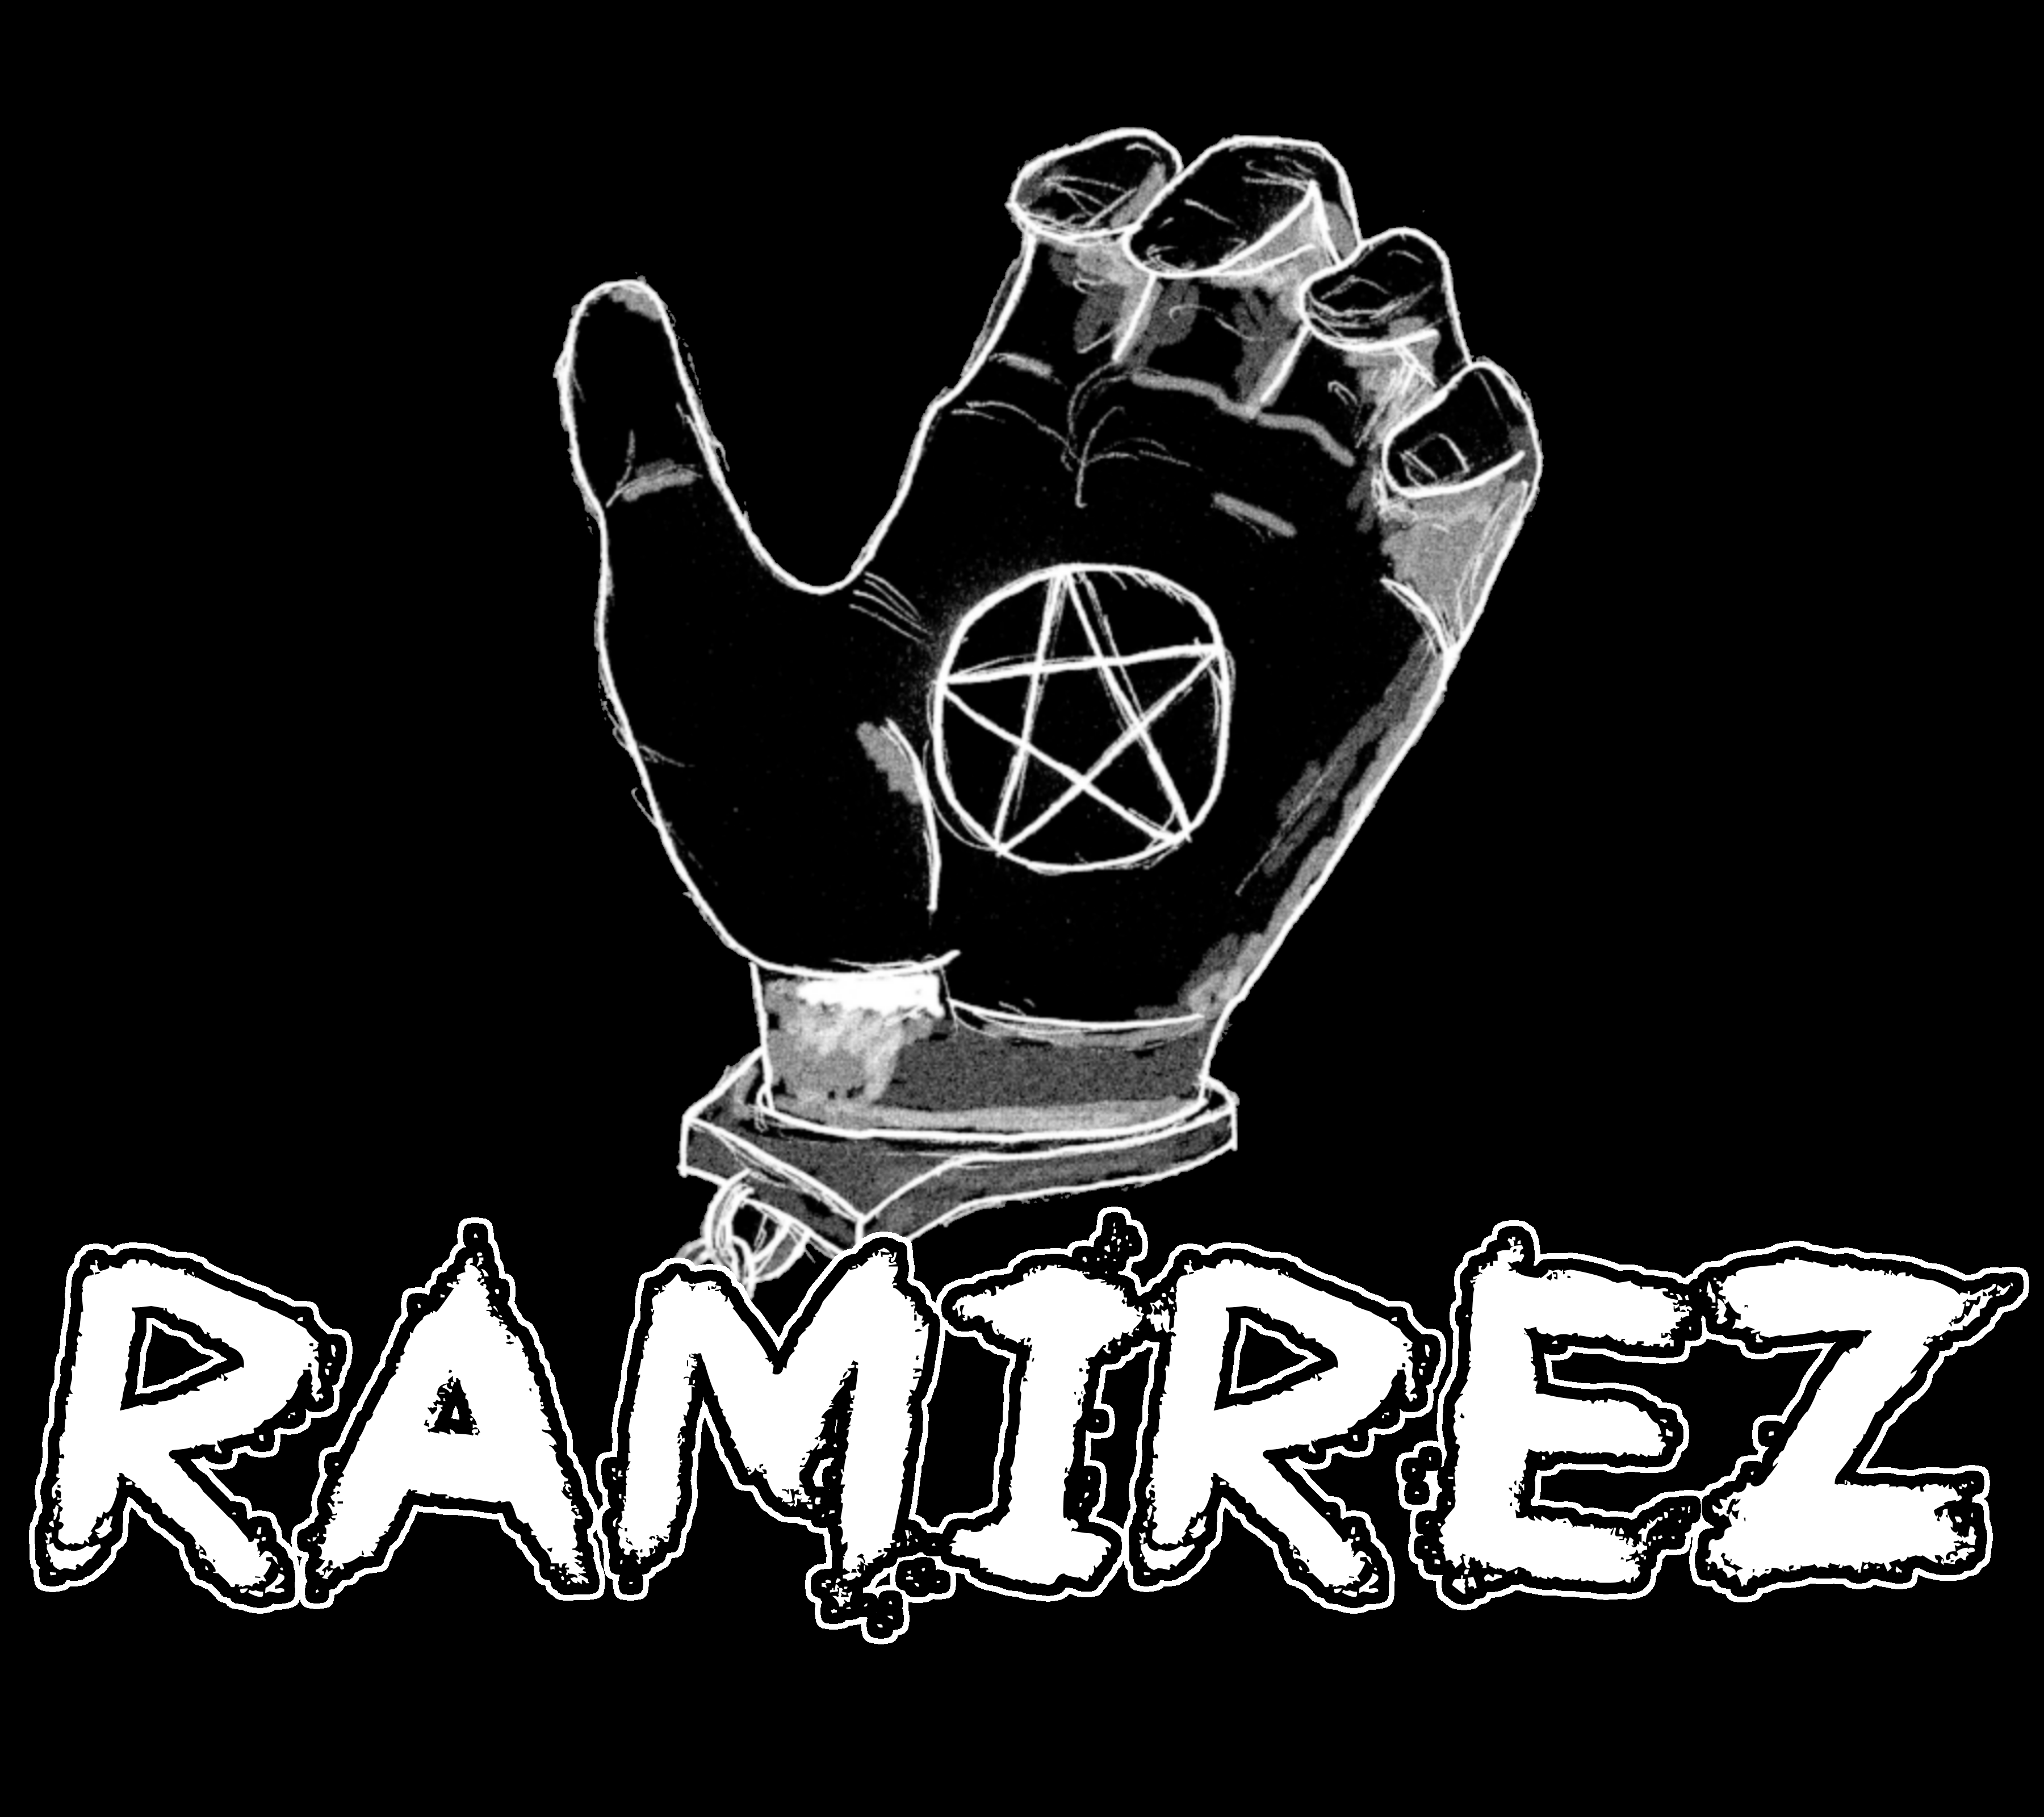 Richard Ramirez Pentagram Night Stalker shirt